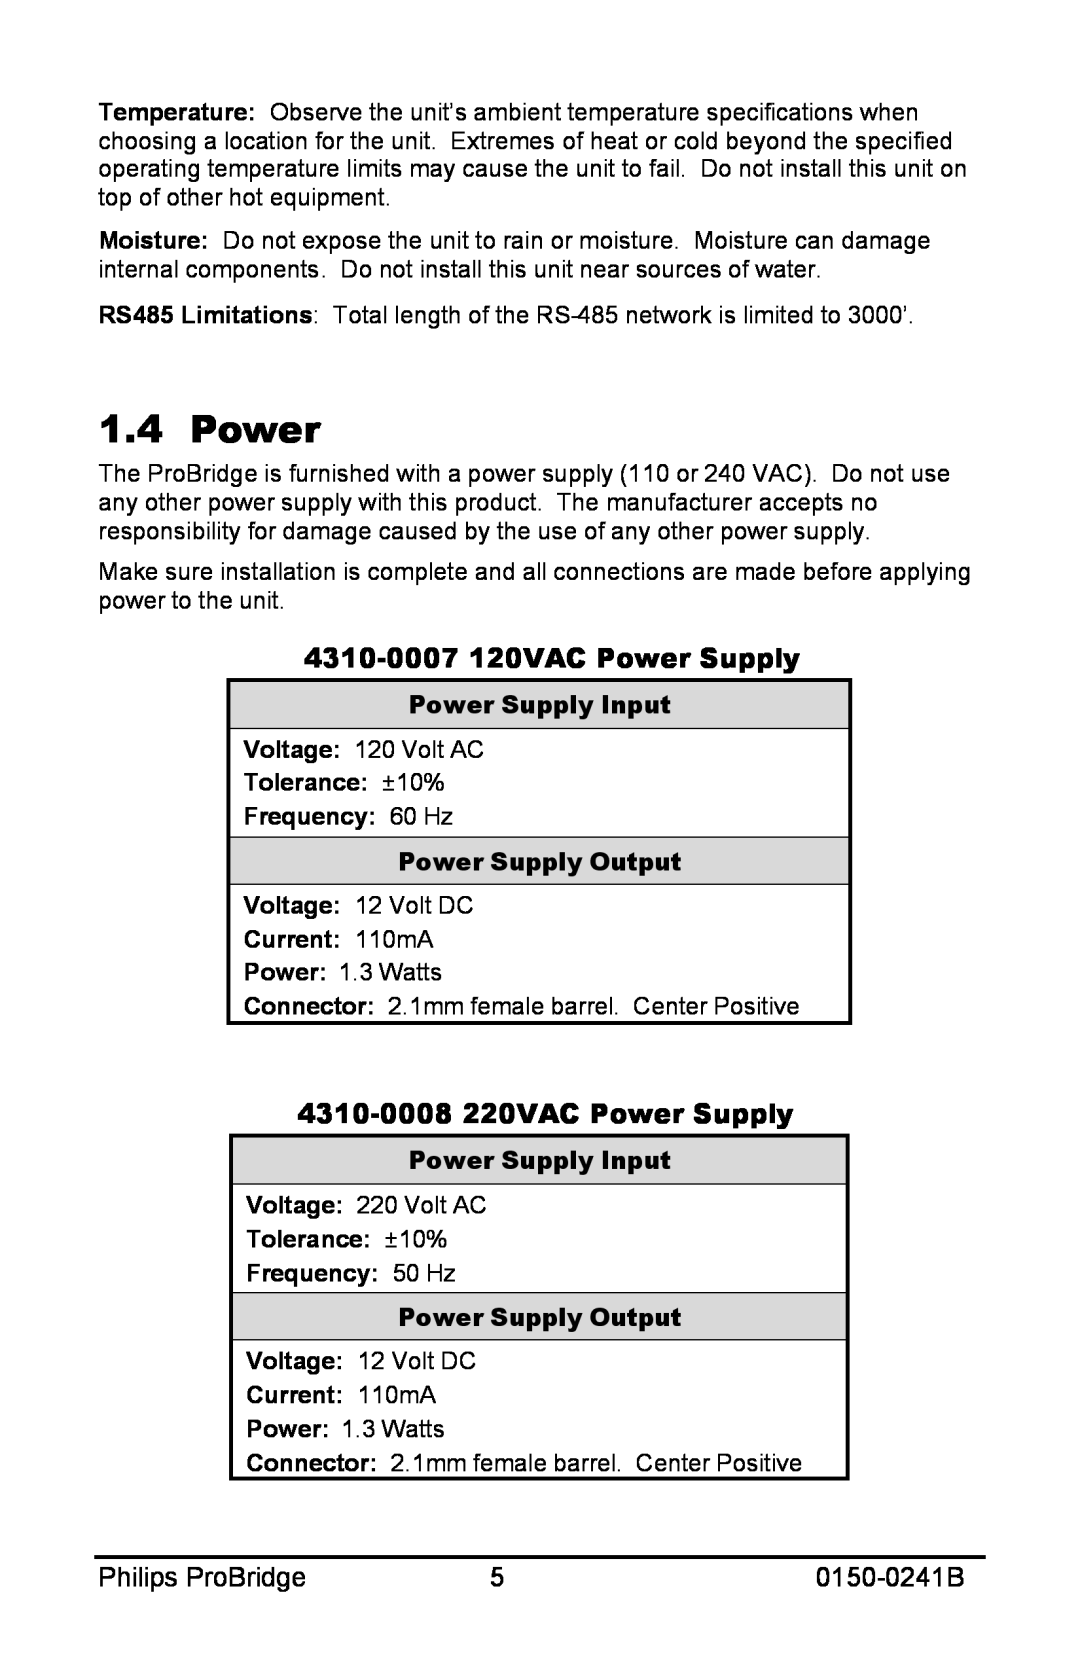 Philips 0150-0241B user manual 4310-0007120VAC Power Supply, 4310-0008220VAC Power Supply, Philips ProBridge 